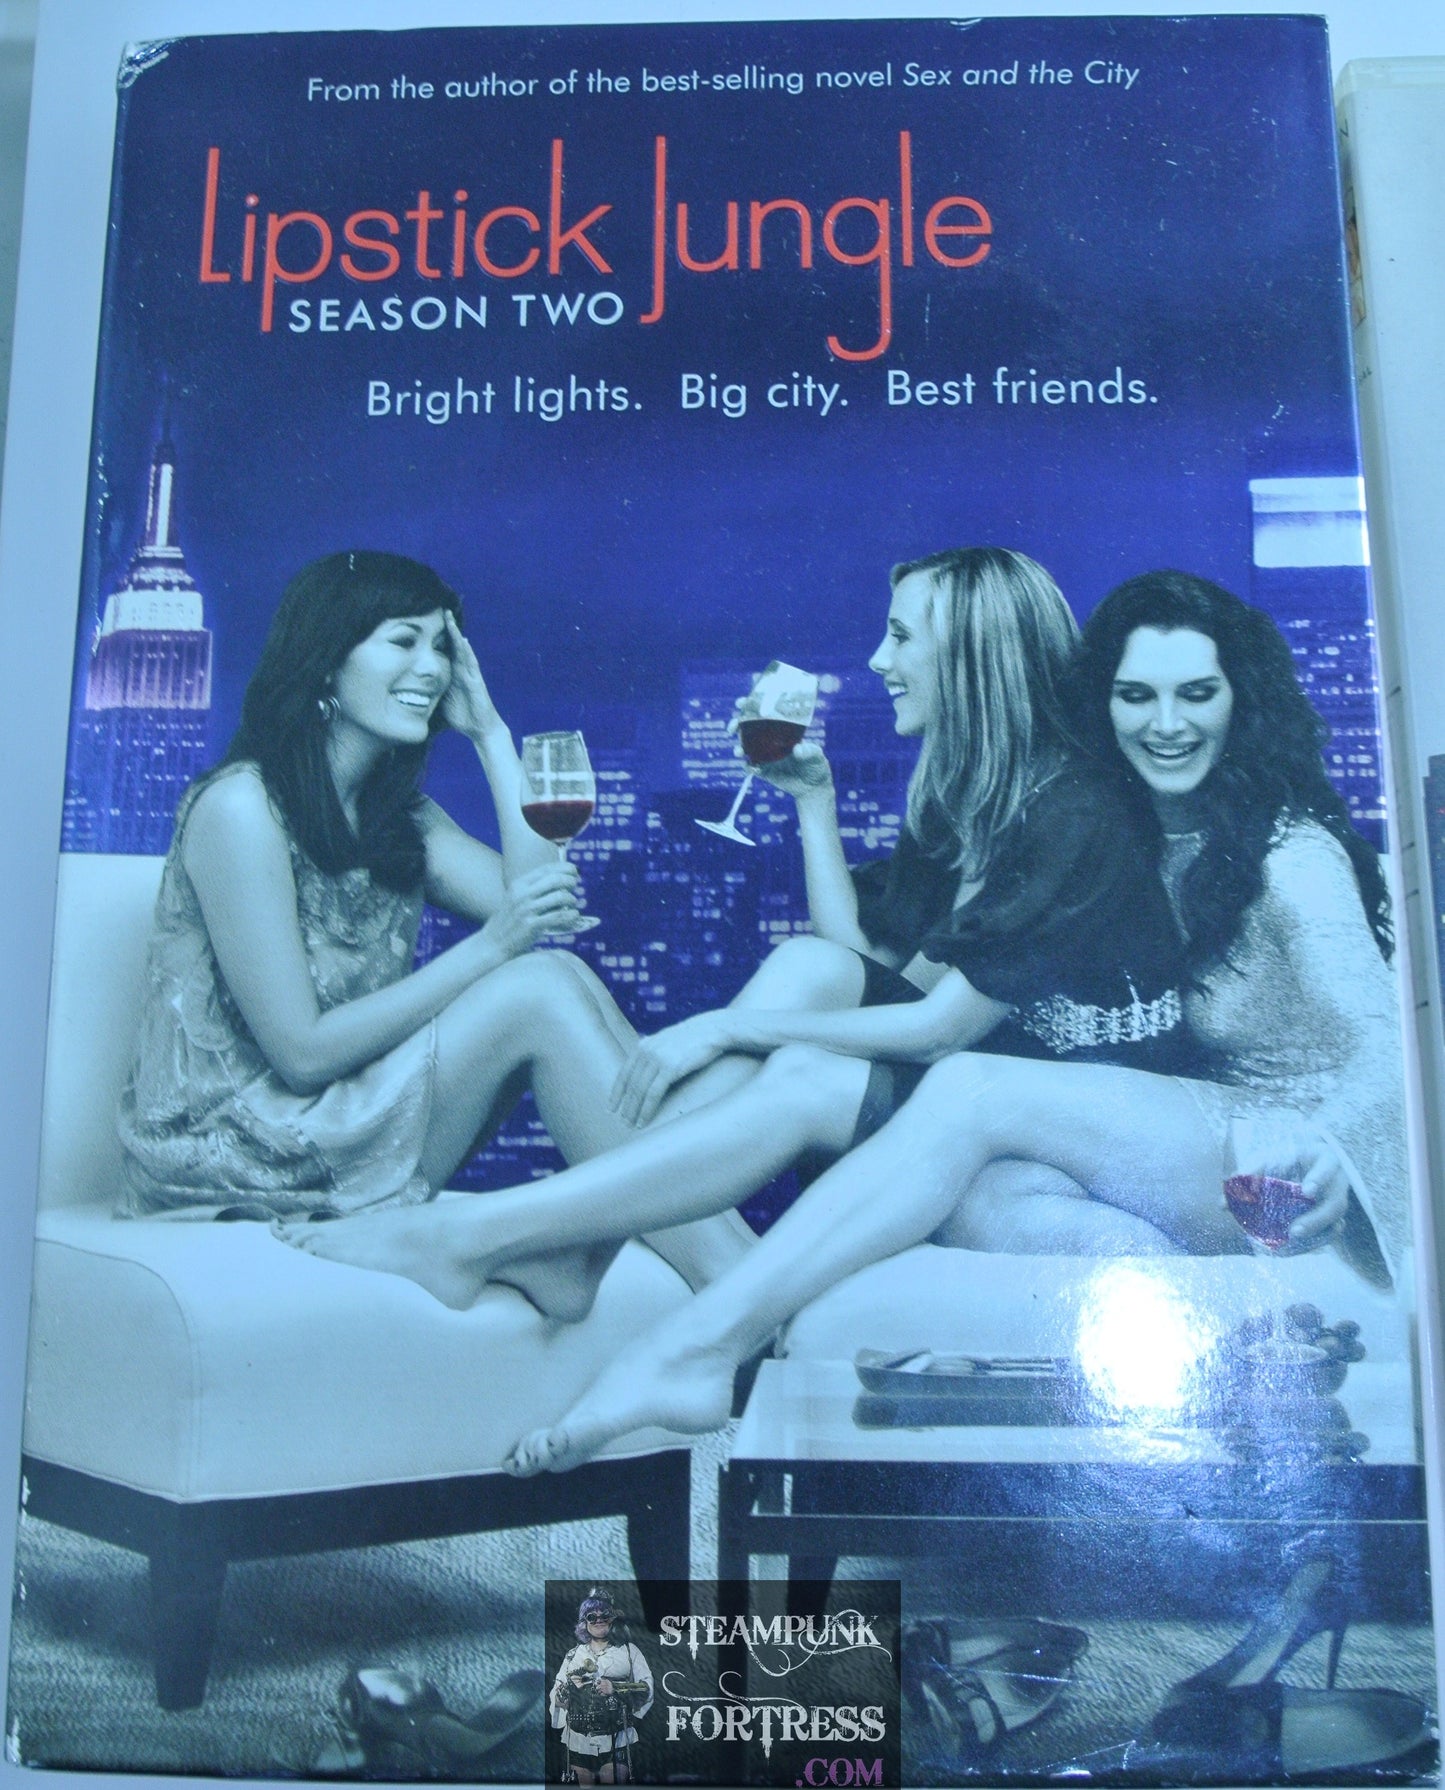 LIPSTICK JUNGLE BUNDLE DVDS SEASON 1 & 2 BROOKE SHIELDS LINDSAY PRICE KIM RAVER GOOD - MASS PRODUCED